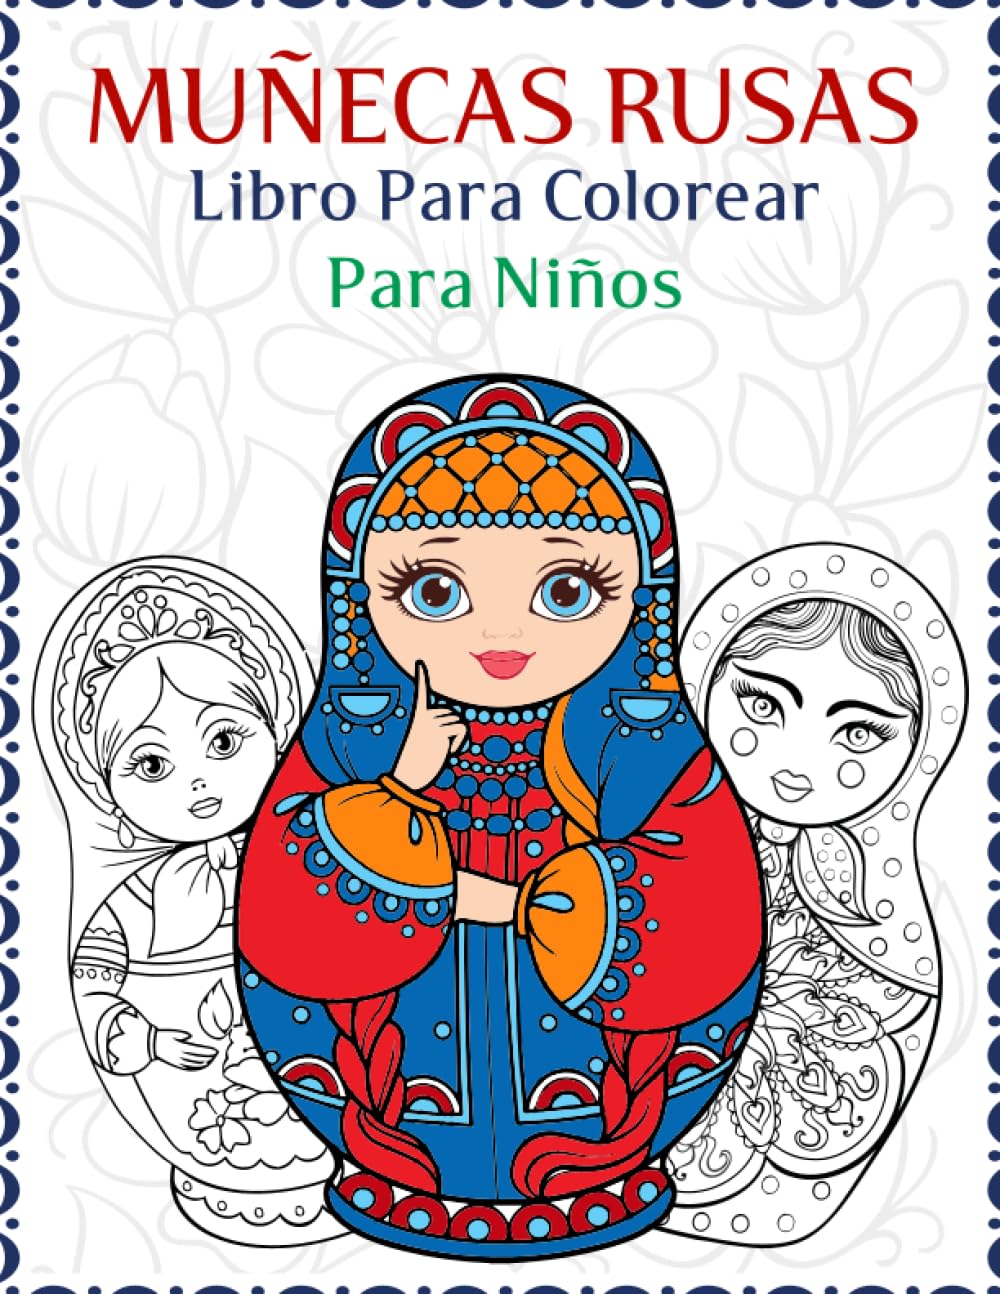 Libro: Muñecas Rusas – Libro para colorear por Marta Editorial Libros